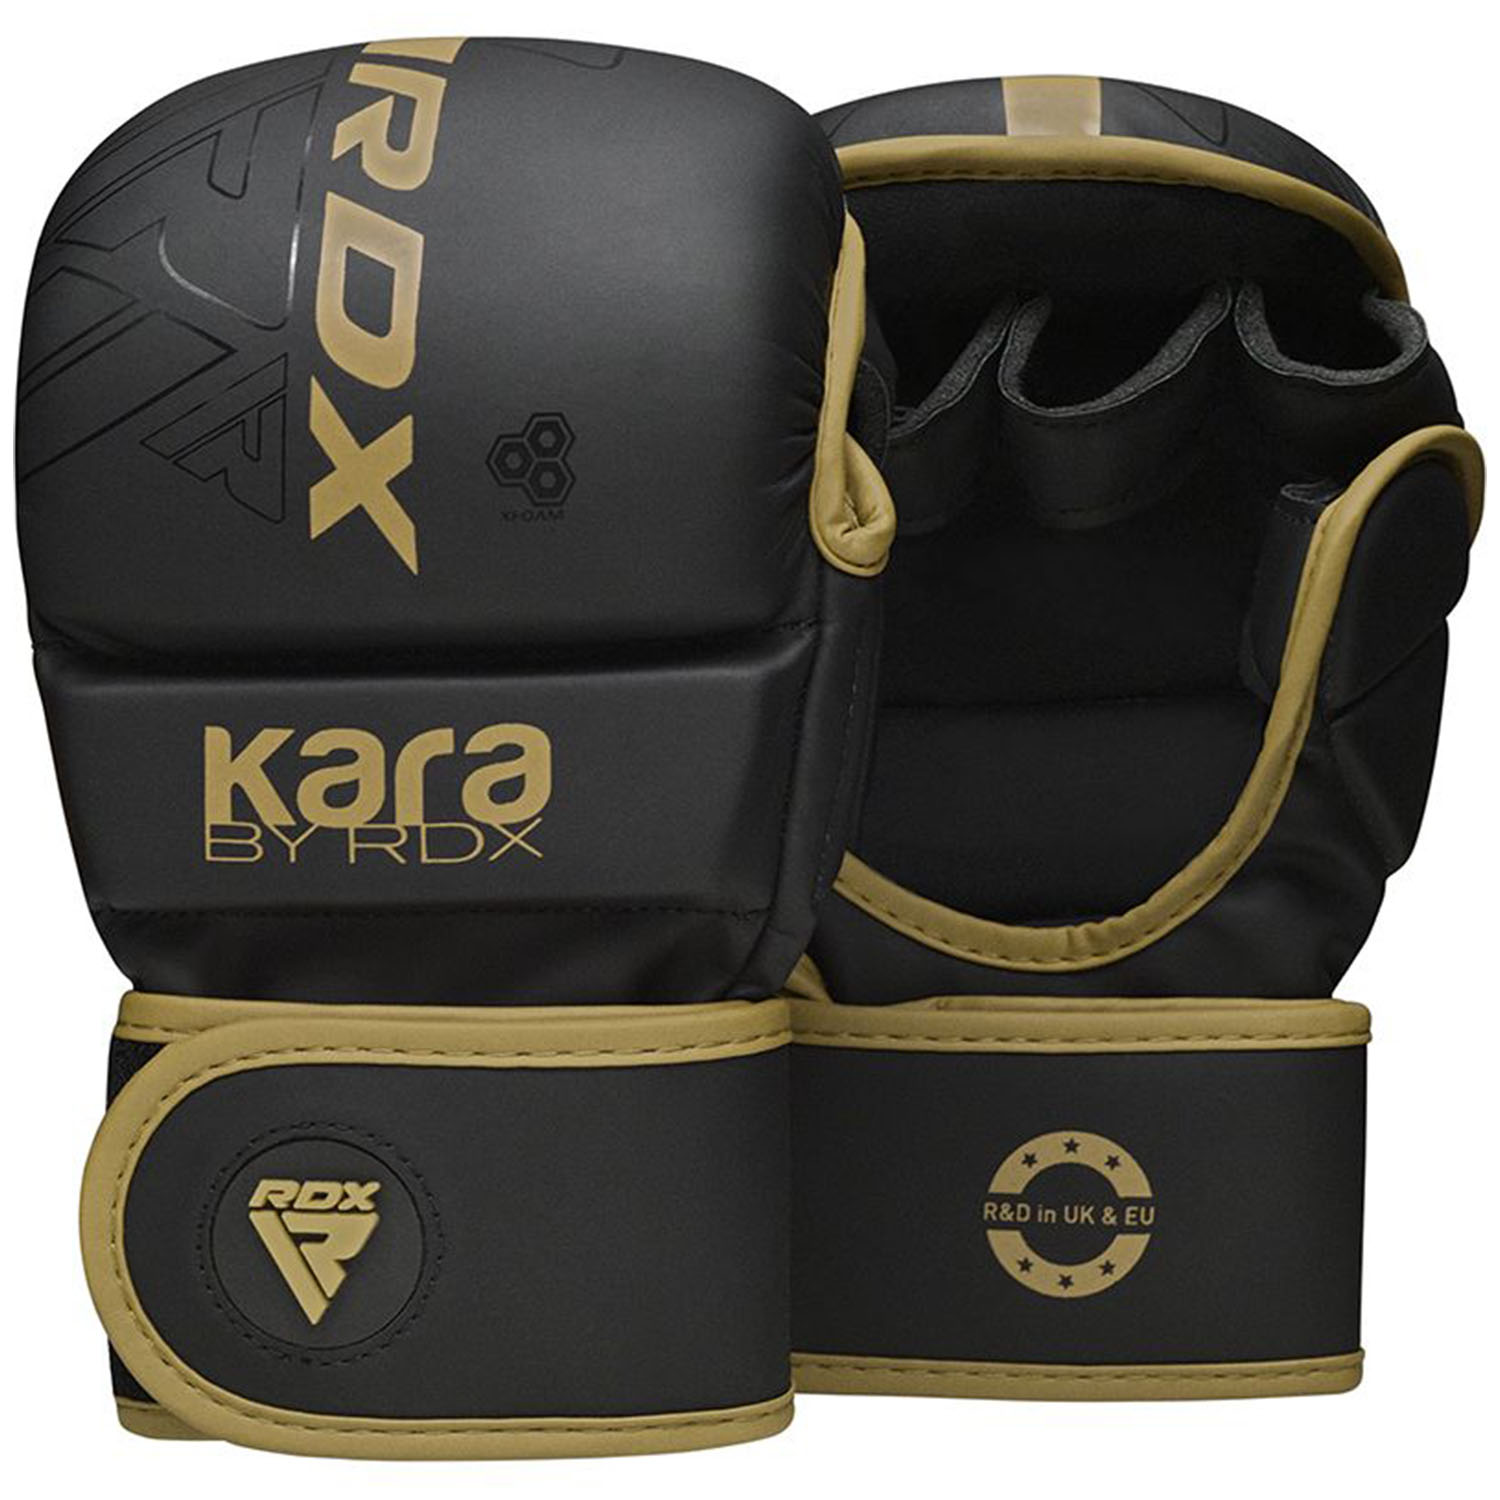 RDX MMA Sparring Boxing Gloves, Kara Series F6, black-gold, L/XL